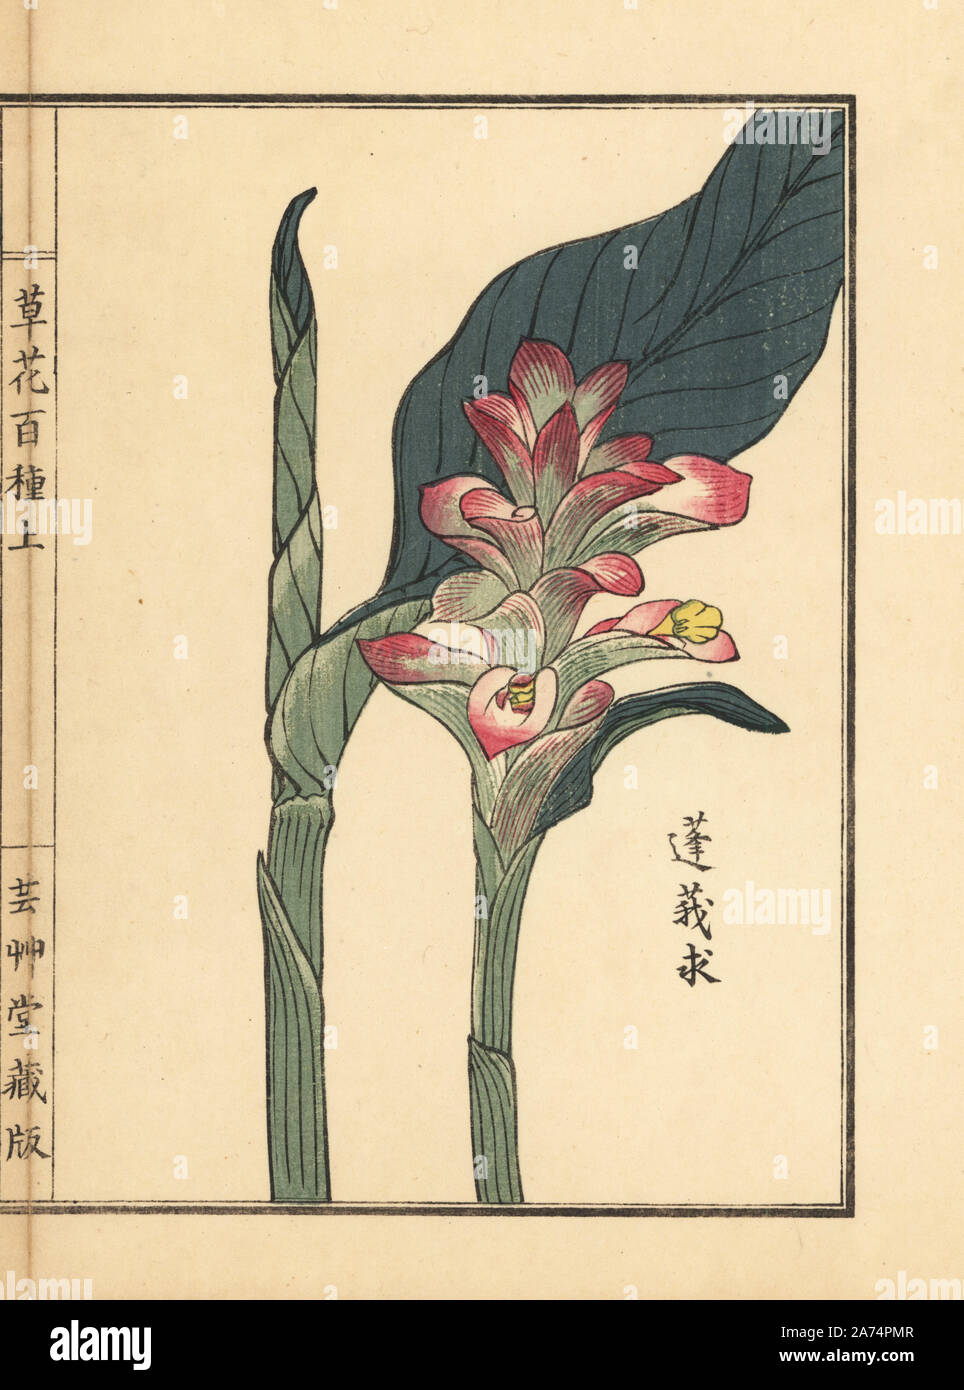 Gajutsu or white turmeric or zedoary, Curcuma zedoaria. Handcoloured woodblock print by Kono Bairei from Kusa Bana Hyakushu (One Hundred Varieties of Flowers), Tokyo, Yamada, 1901. Stock Photo